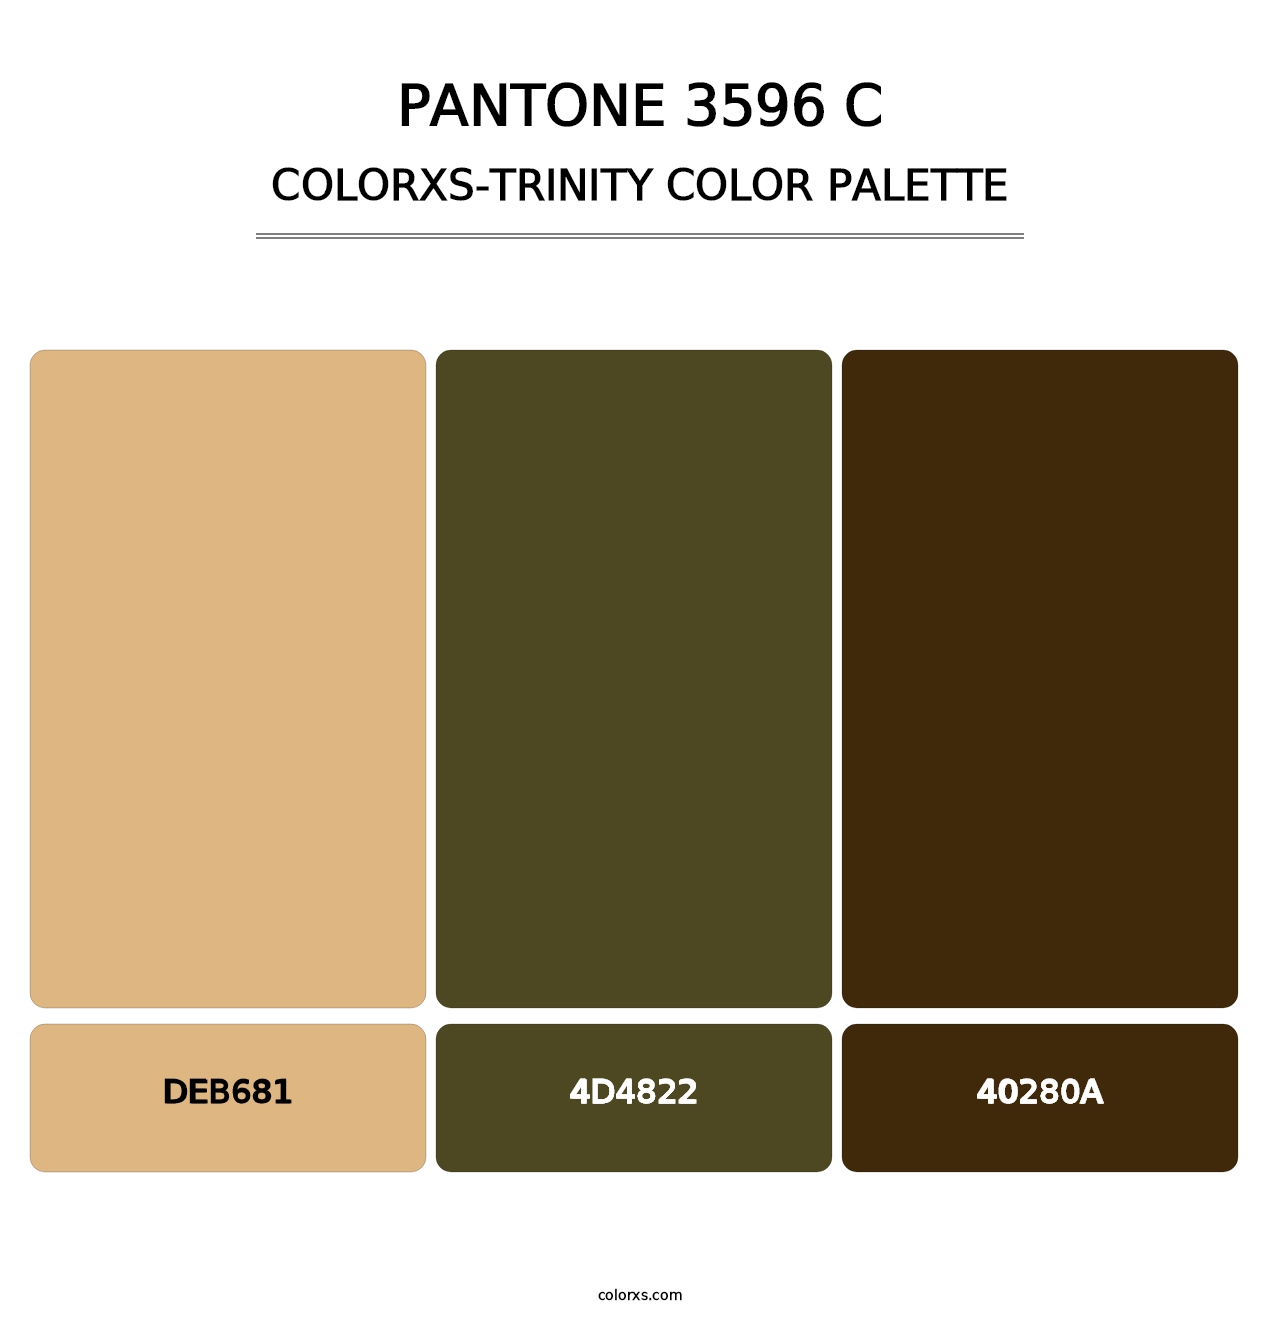 PANTONE 3596 C - Colorxs Trinity Palette